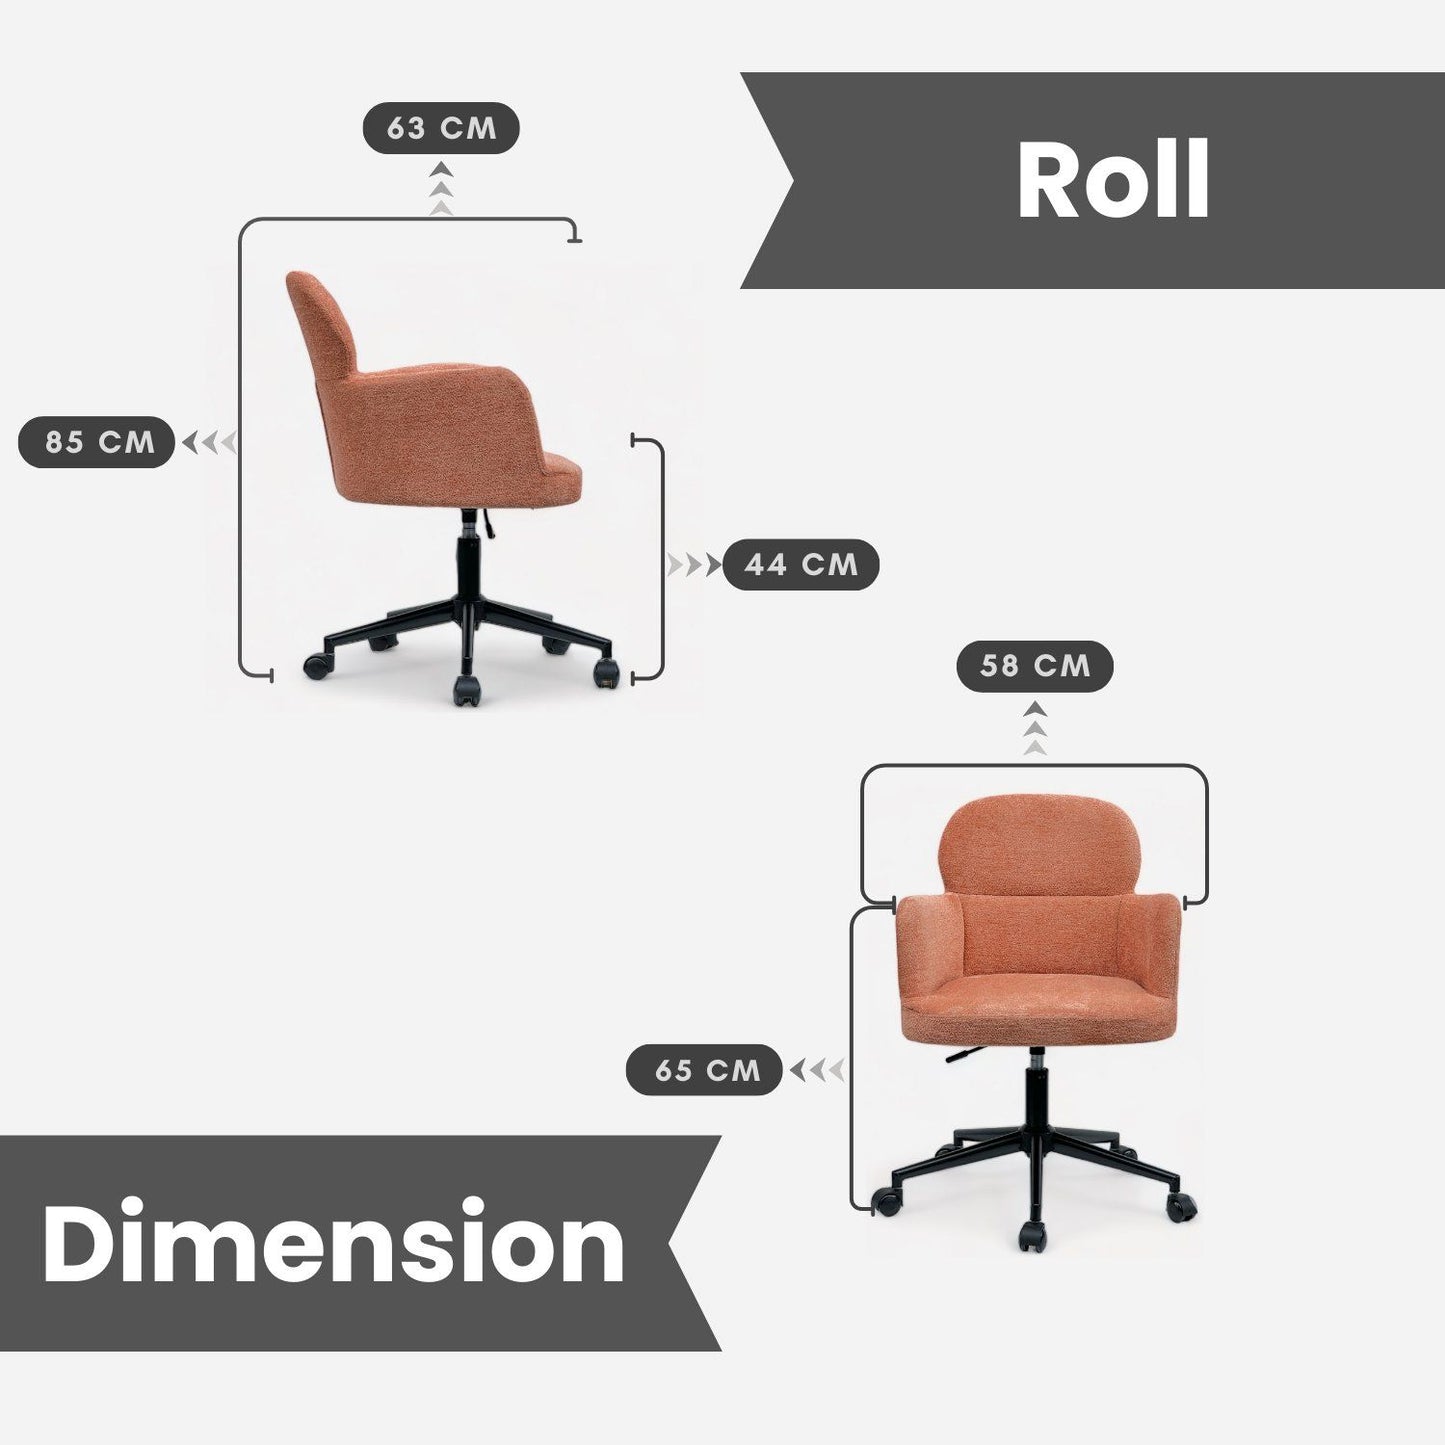 Roll - Orange - Office Chair